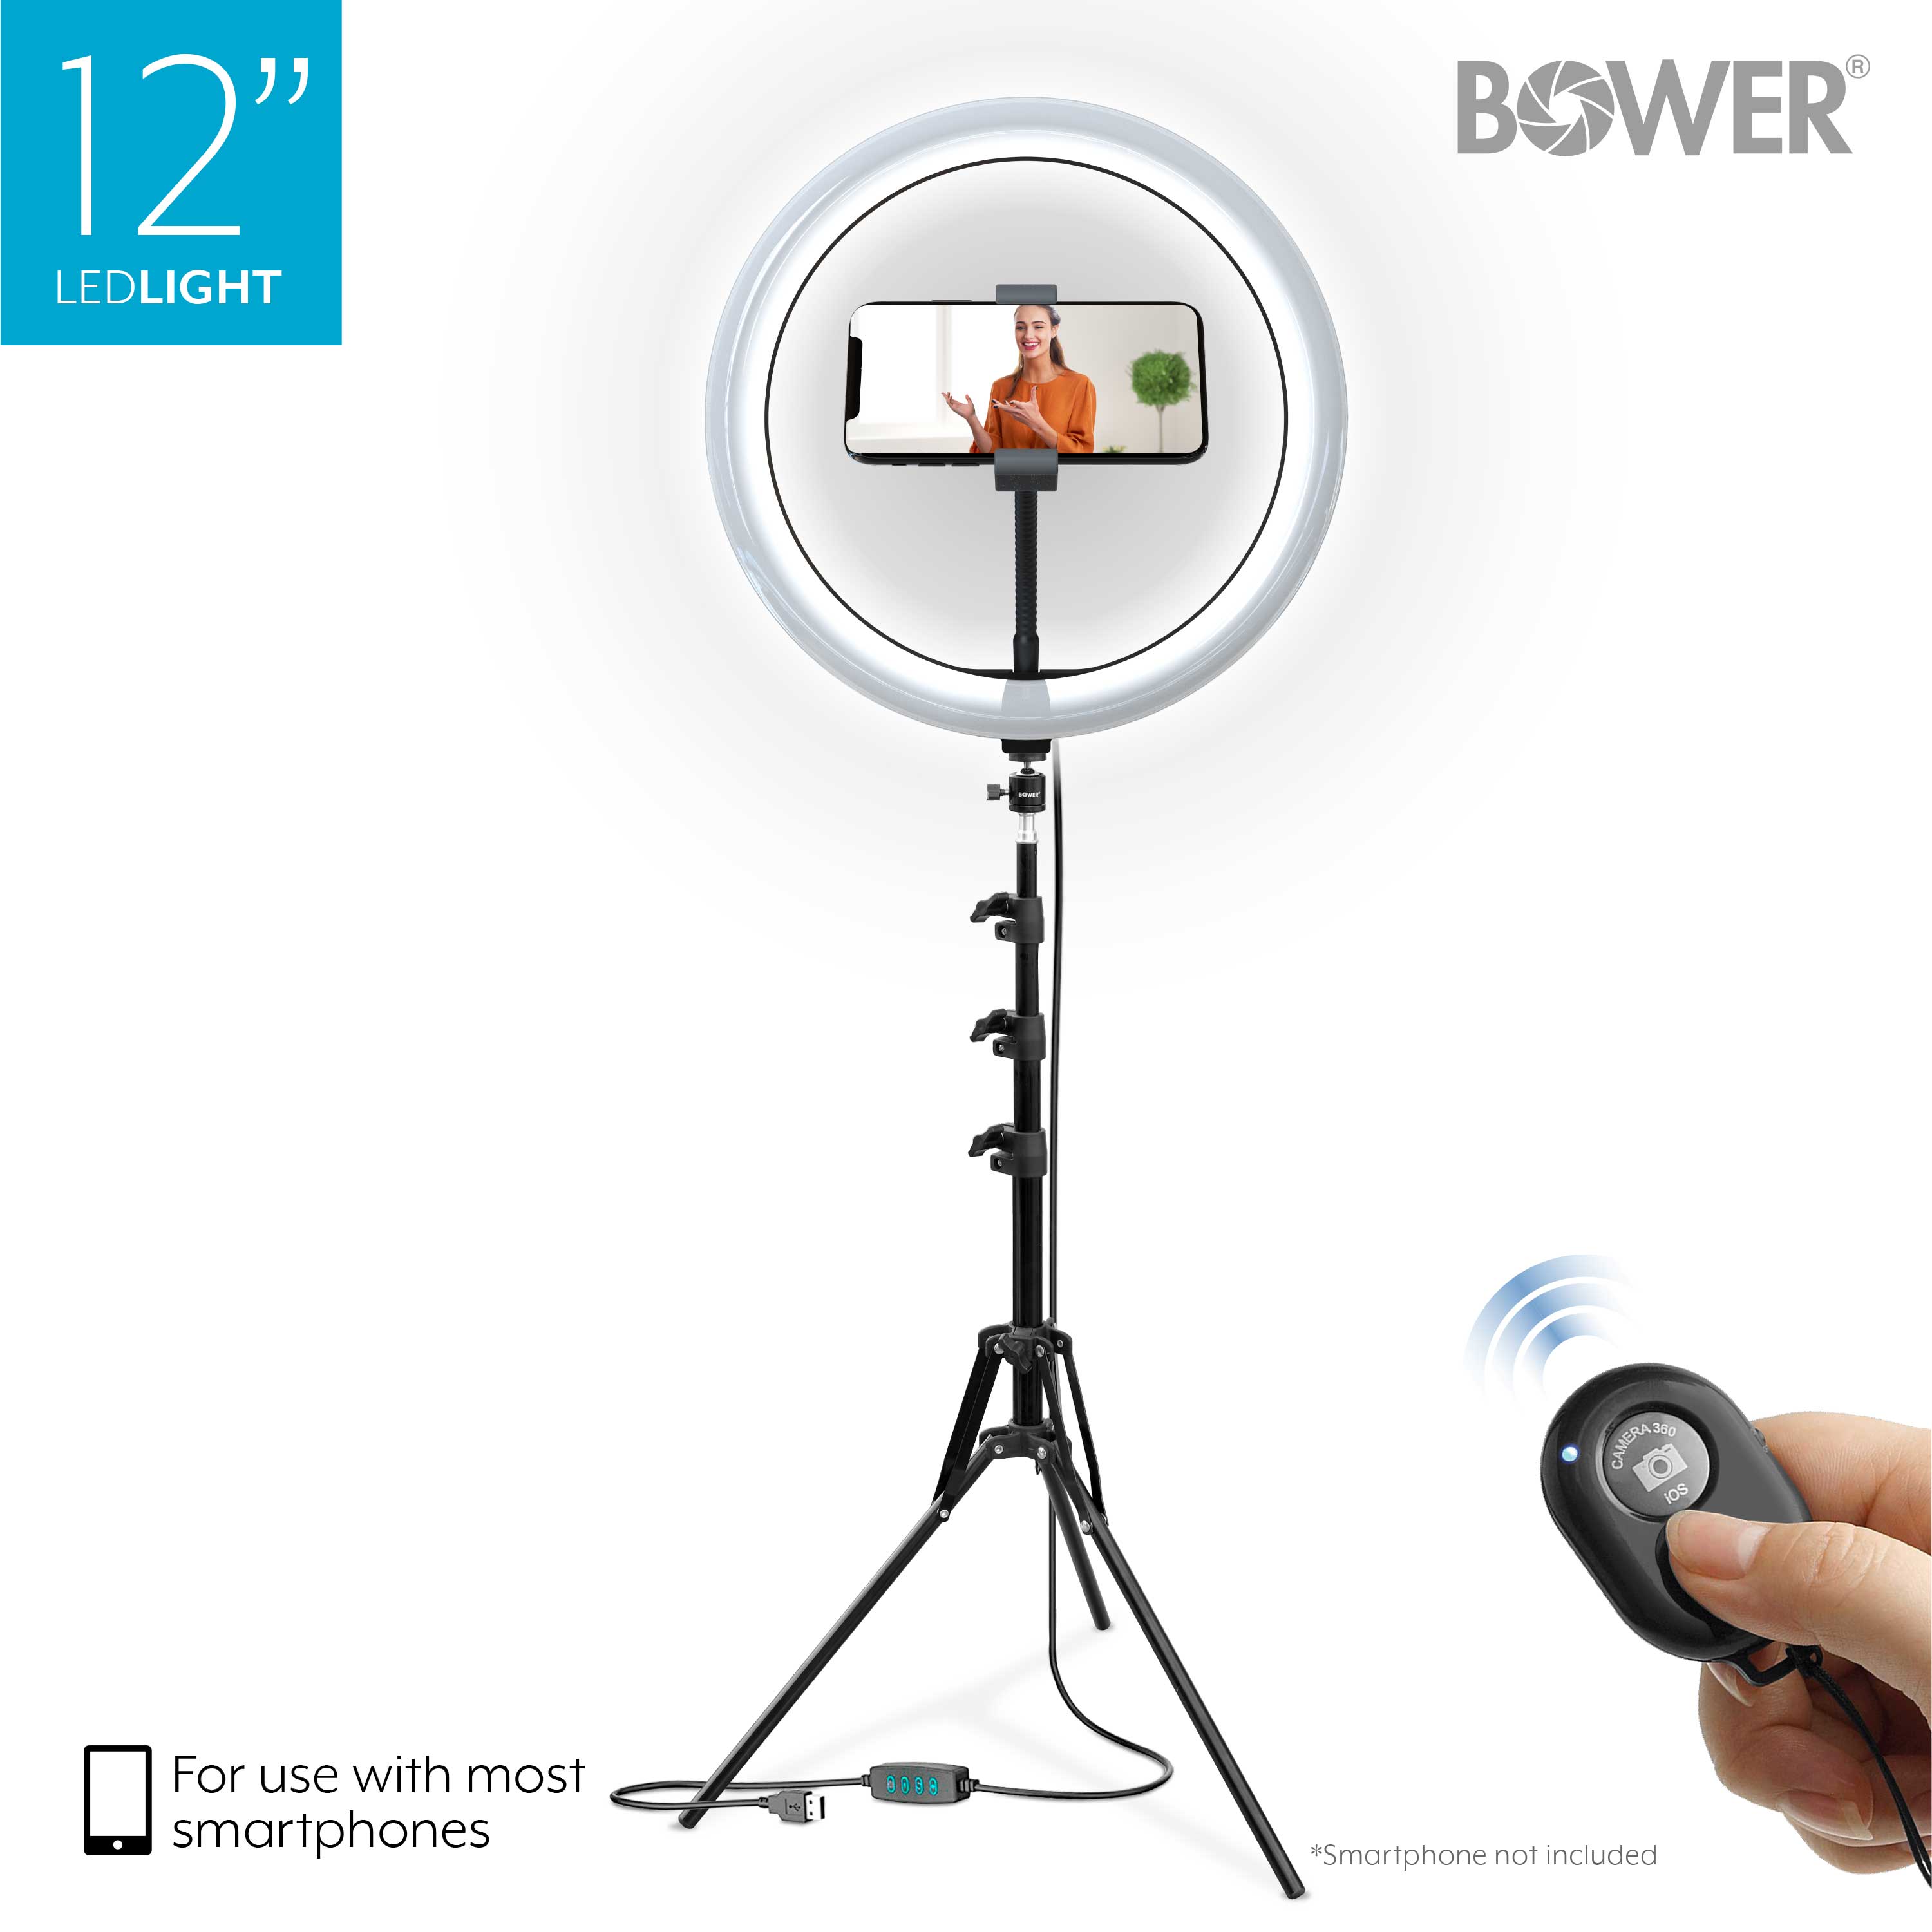 Bower 12” Studio Light USB Power Ball-Head Mount 62" Adjustable Tripod 3 Colors 10 Brightness Levels In-Line Remote - image 1 of 7